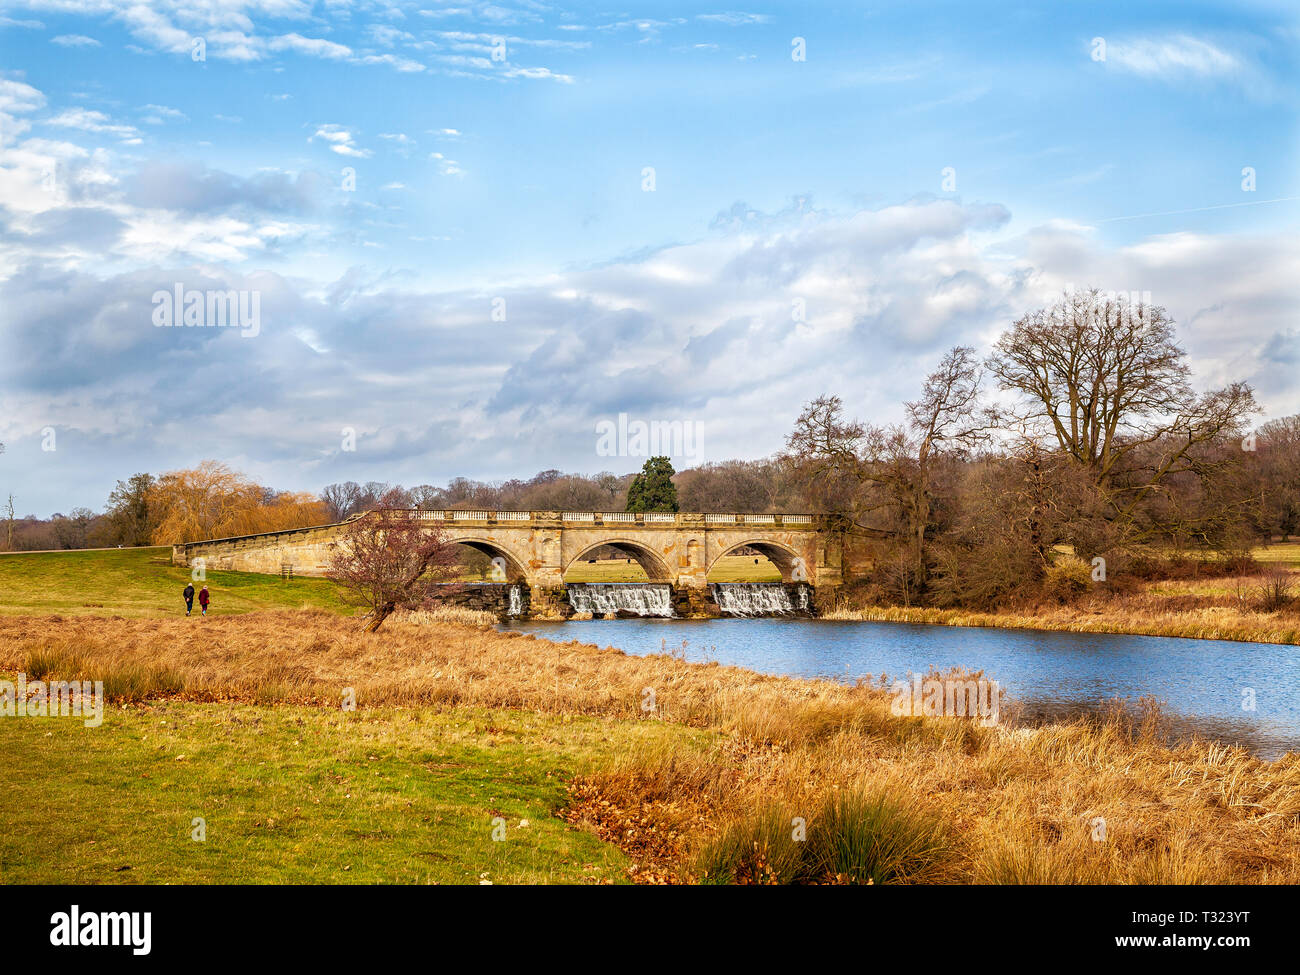 View of Bridge at Kedlestone Hall, Kedlestone, Derbyshire, England Stock Photo